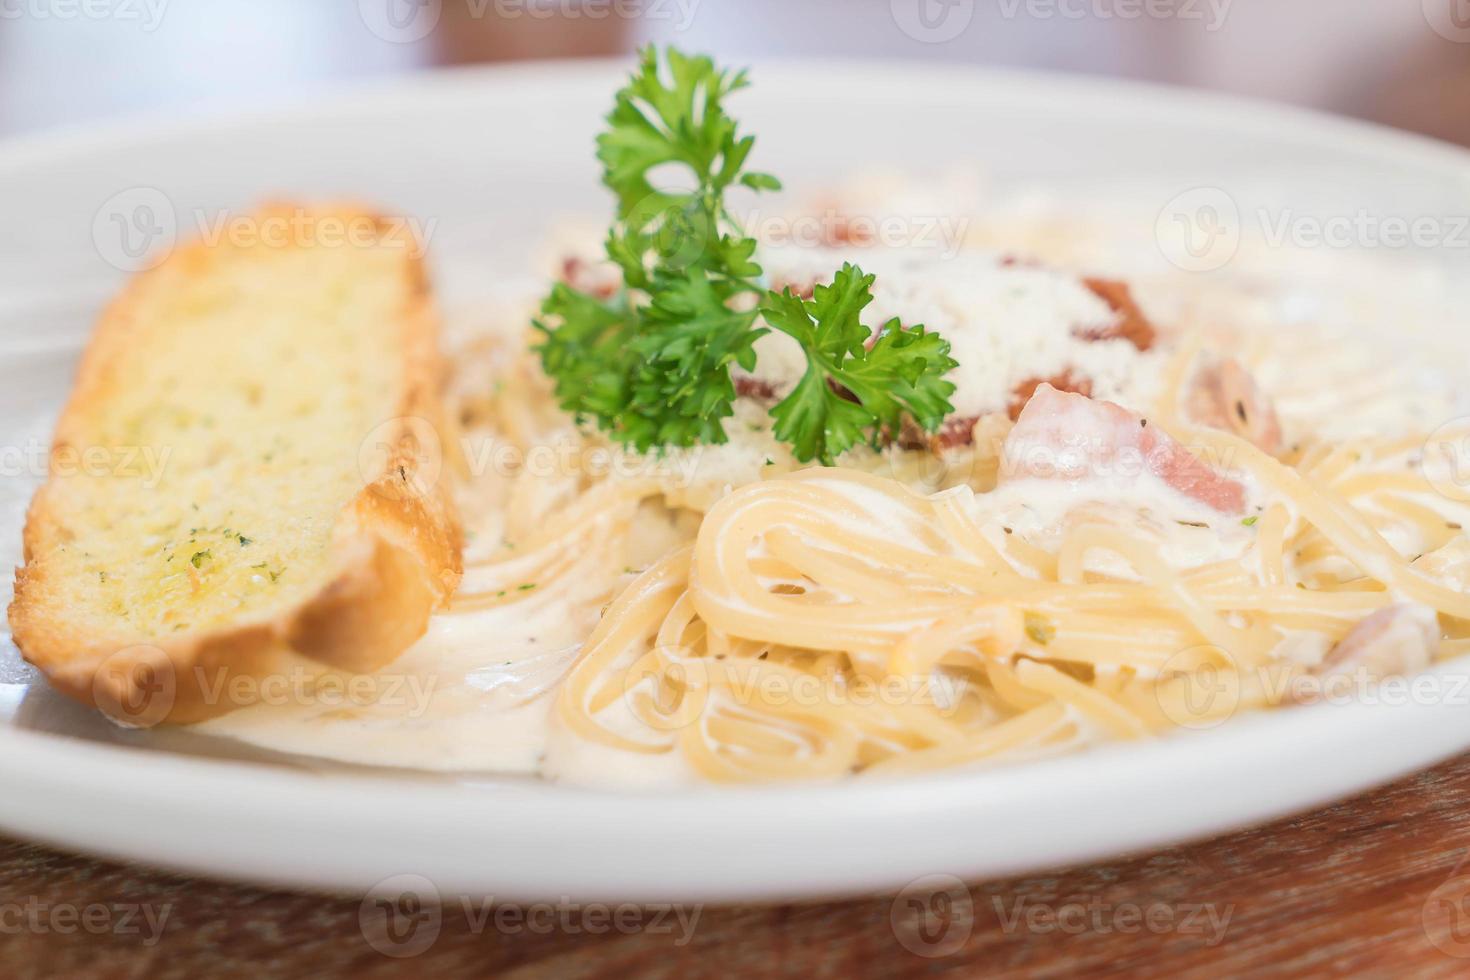 Spaghetti carbonara on plate - Italian food photo